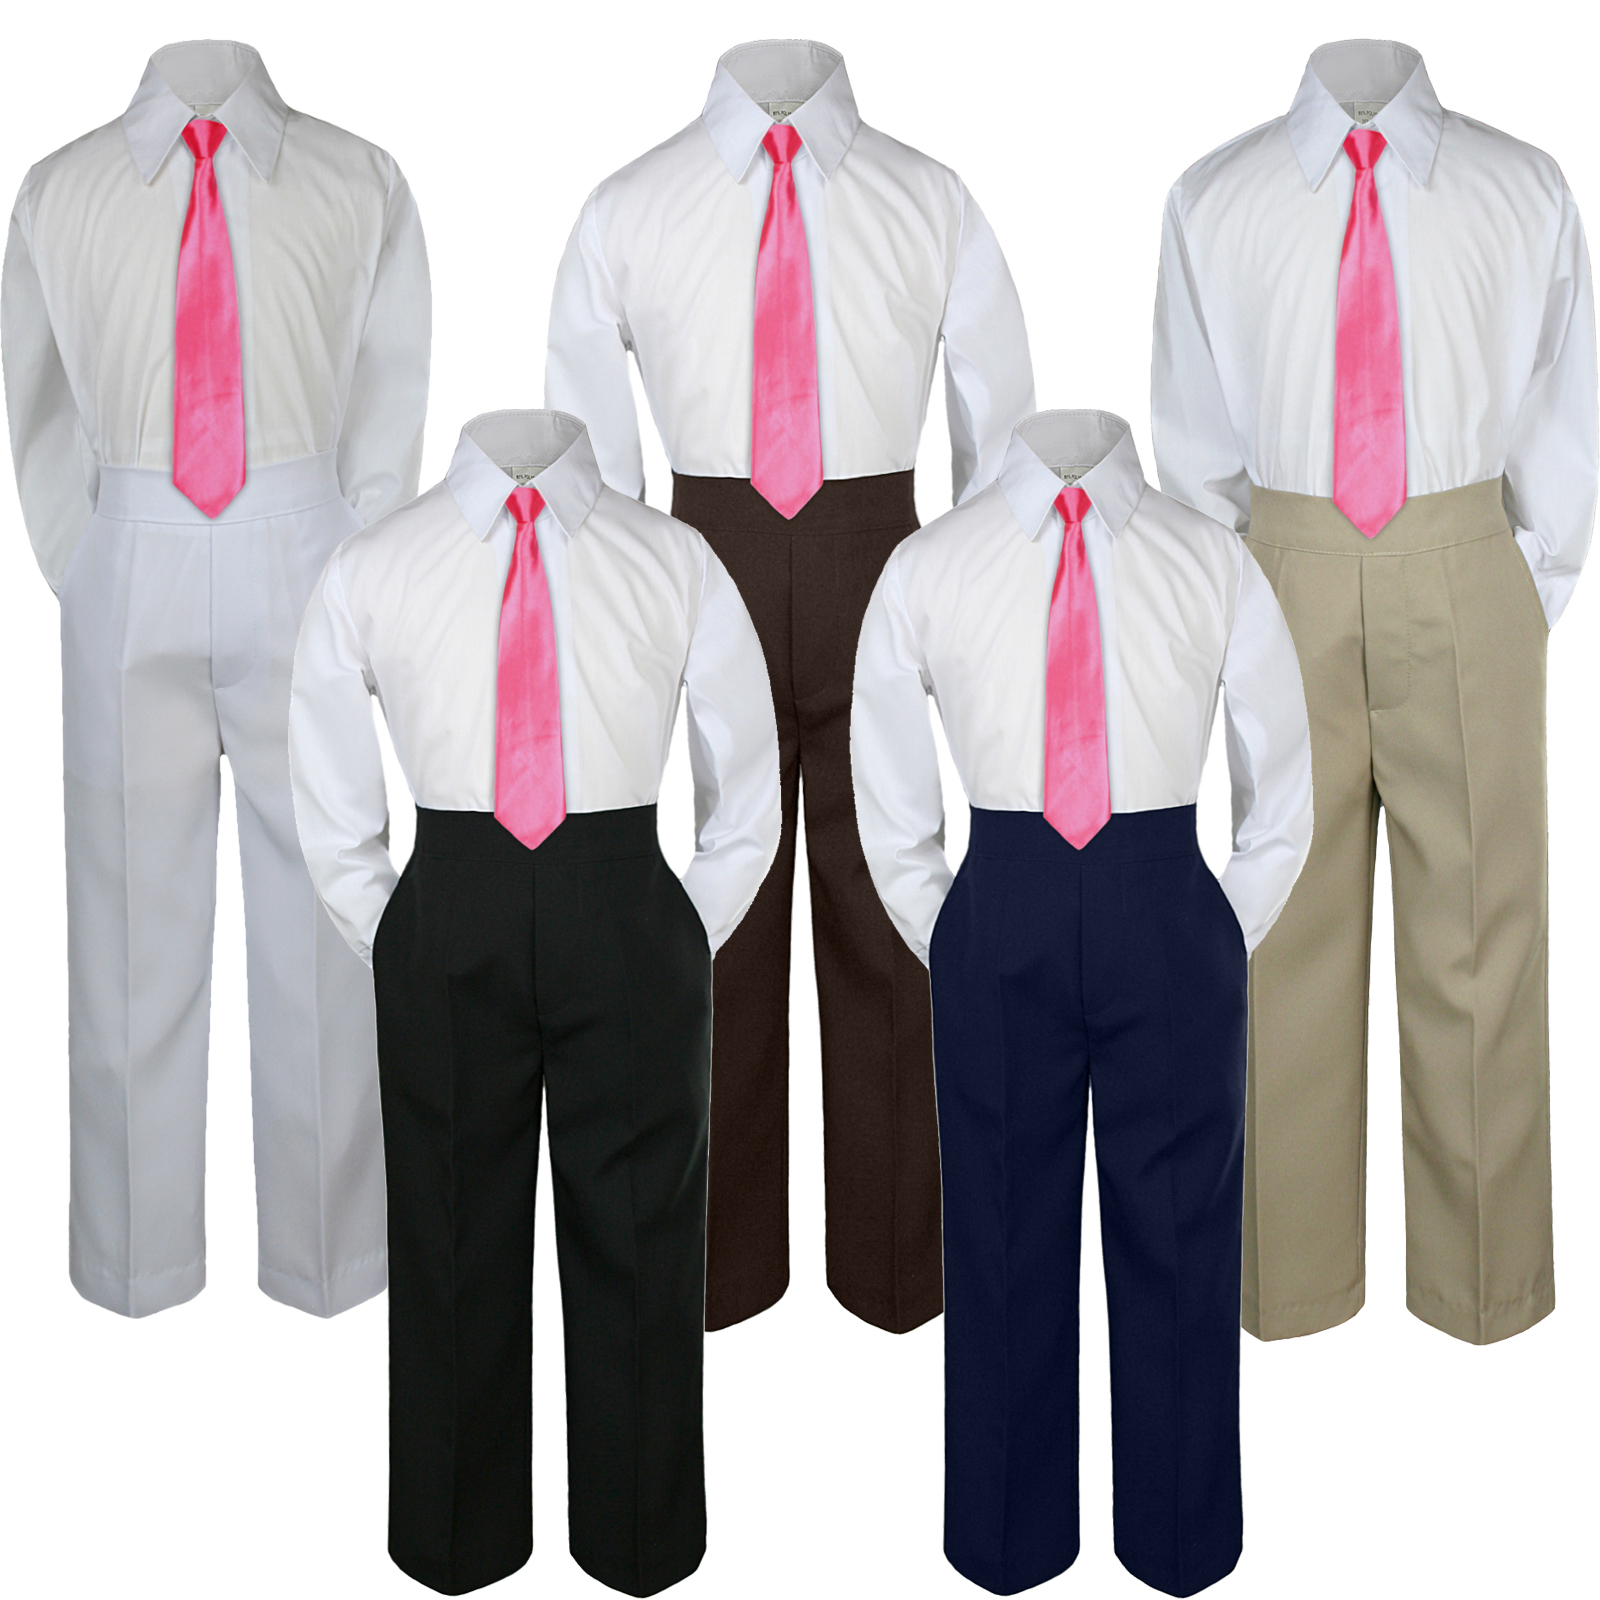 Leadertux 3pc S M L XL 2T 3T 4T Baby Toddler Boys Shirt Pants Suits Tuxedo Formal Wedding Outfits Coral Peach Sunset Necktie Set